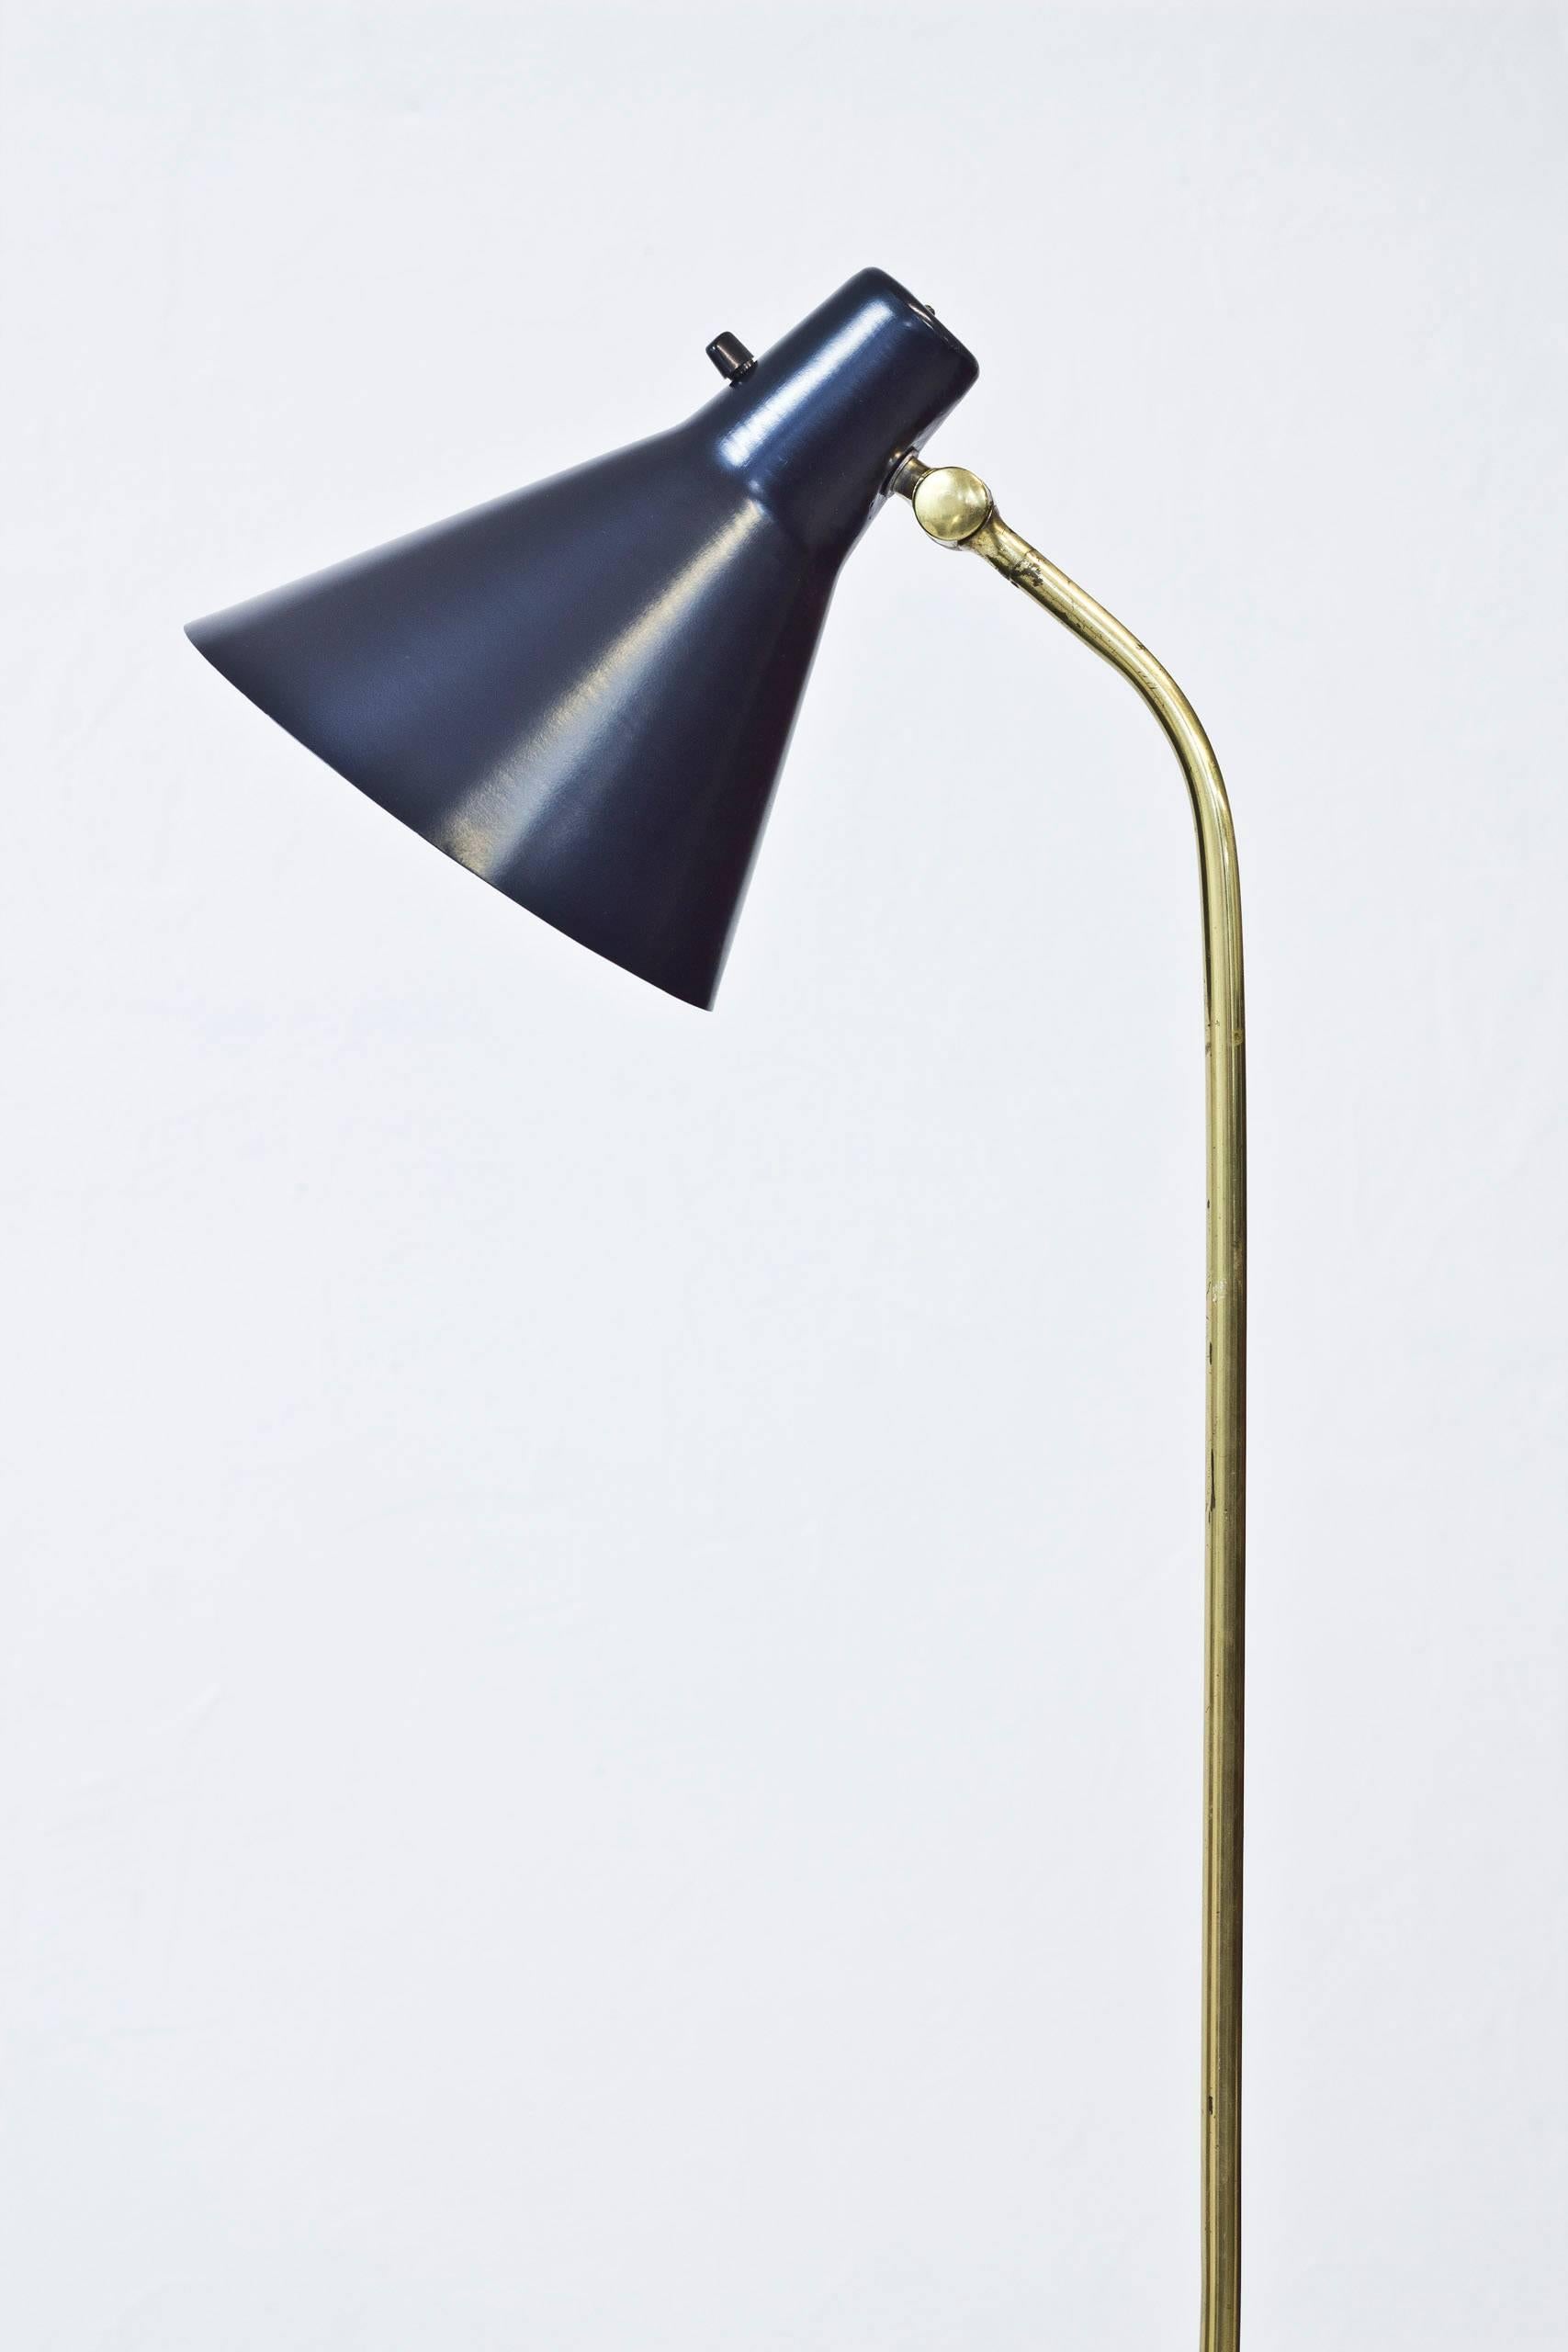 Scandinavian Modern 1950s Floor Lamp by Nordiska Kompaniet